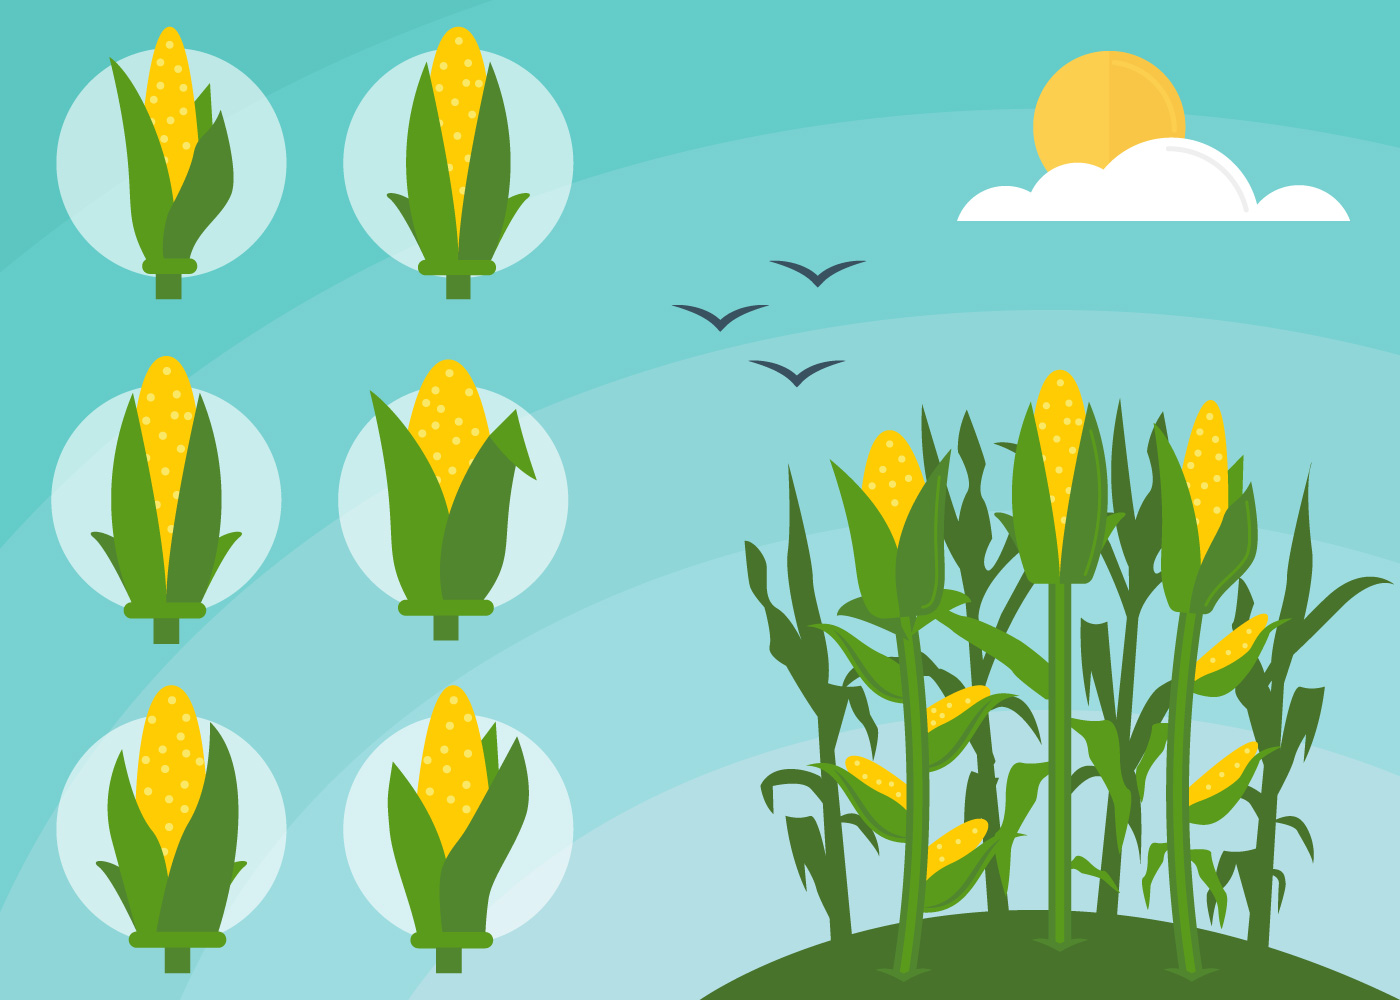 Download Free Outstanding Corn Stalks Vectors for free.